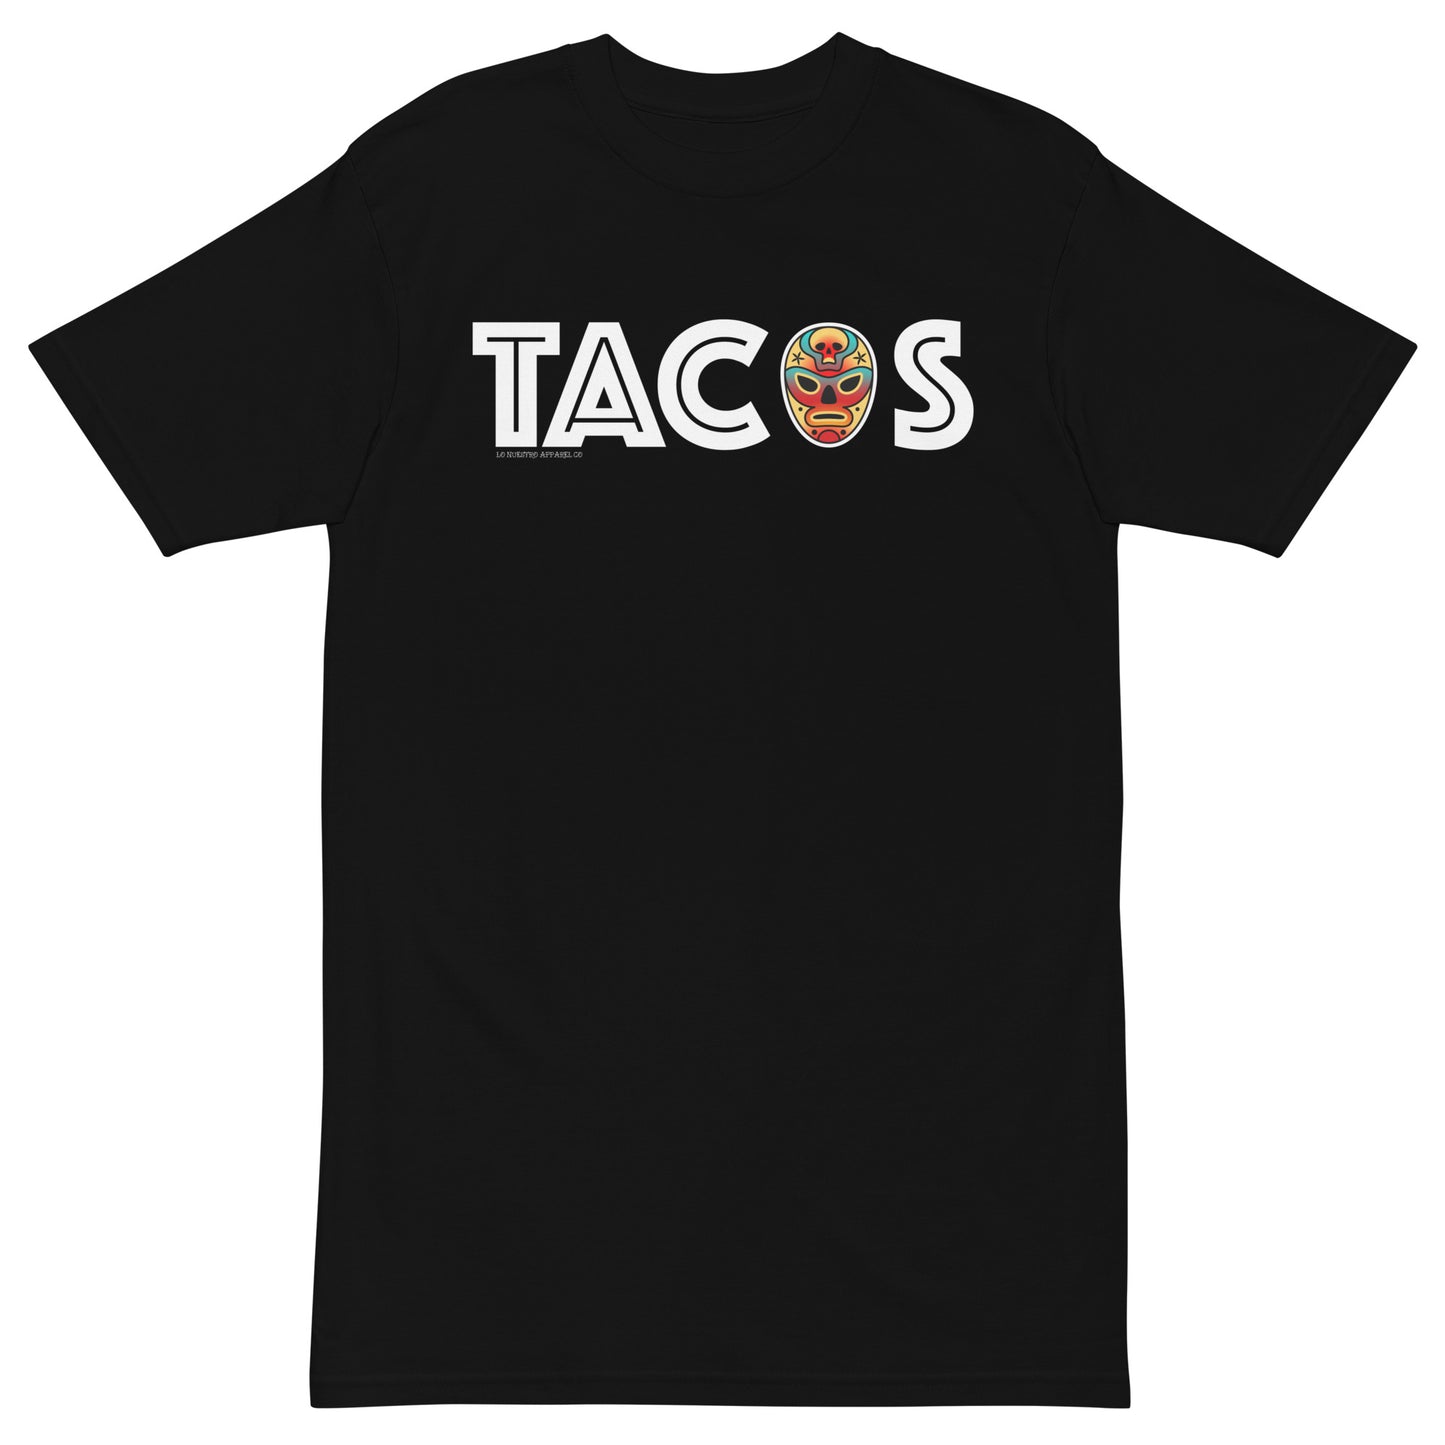 "TACOS" T-shirt | Luchador Mask Design | Mexican Food Apparel